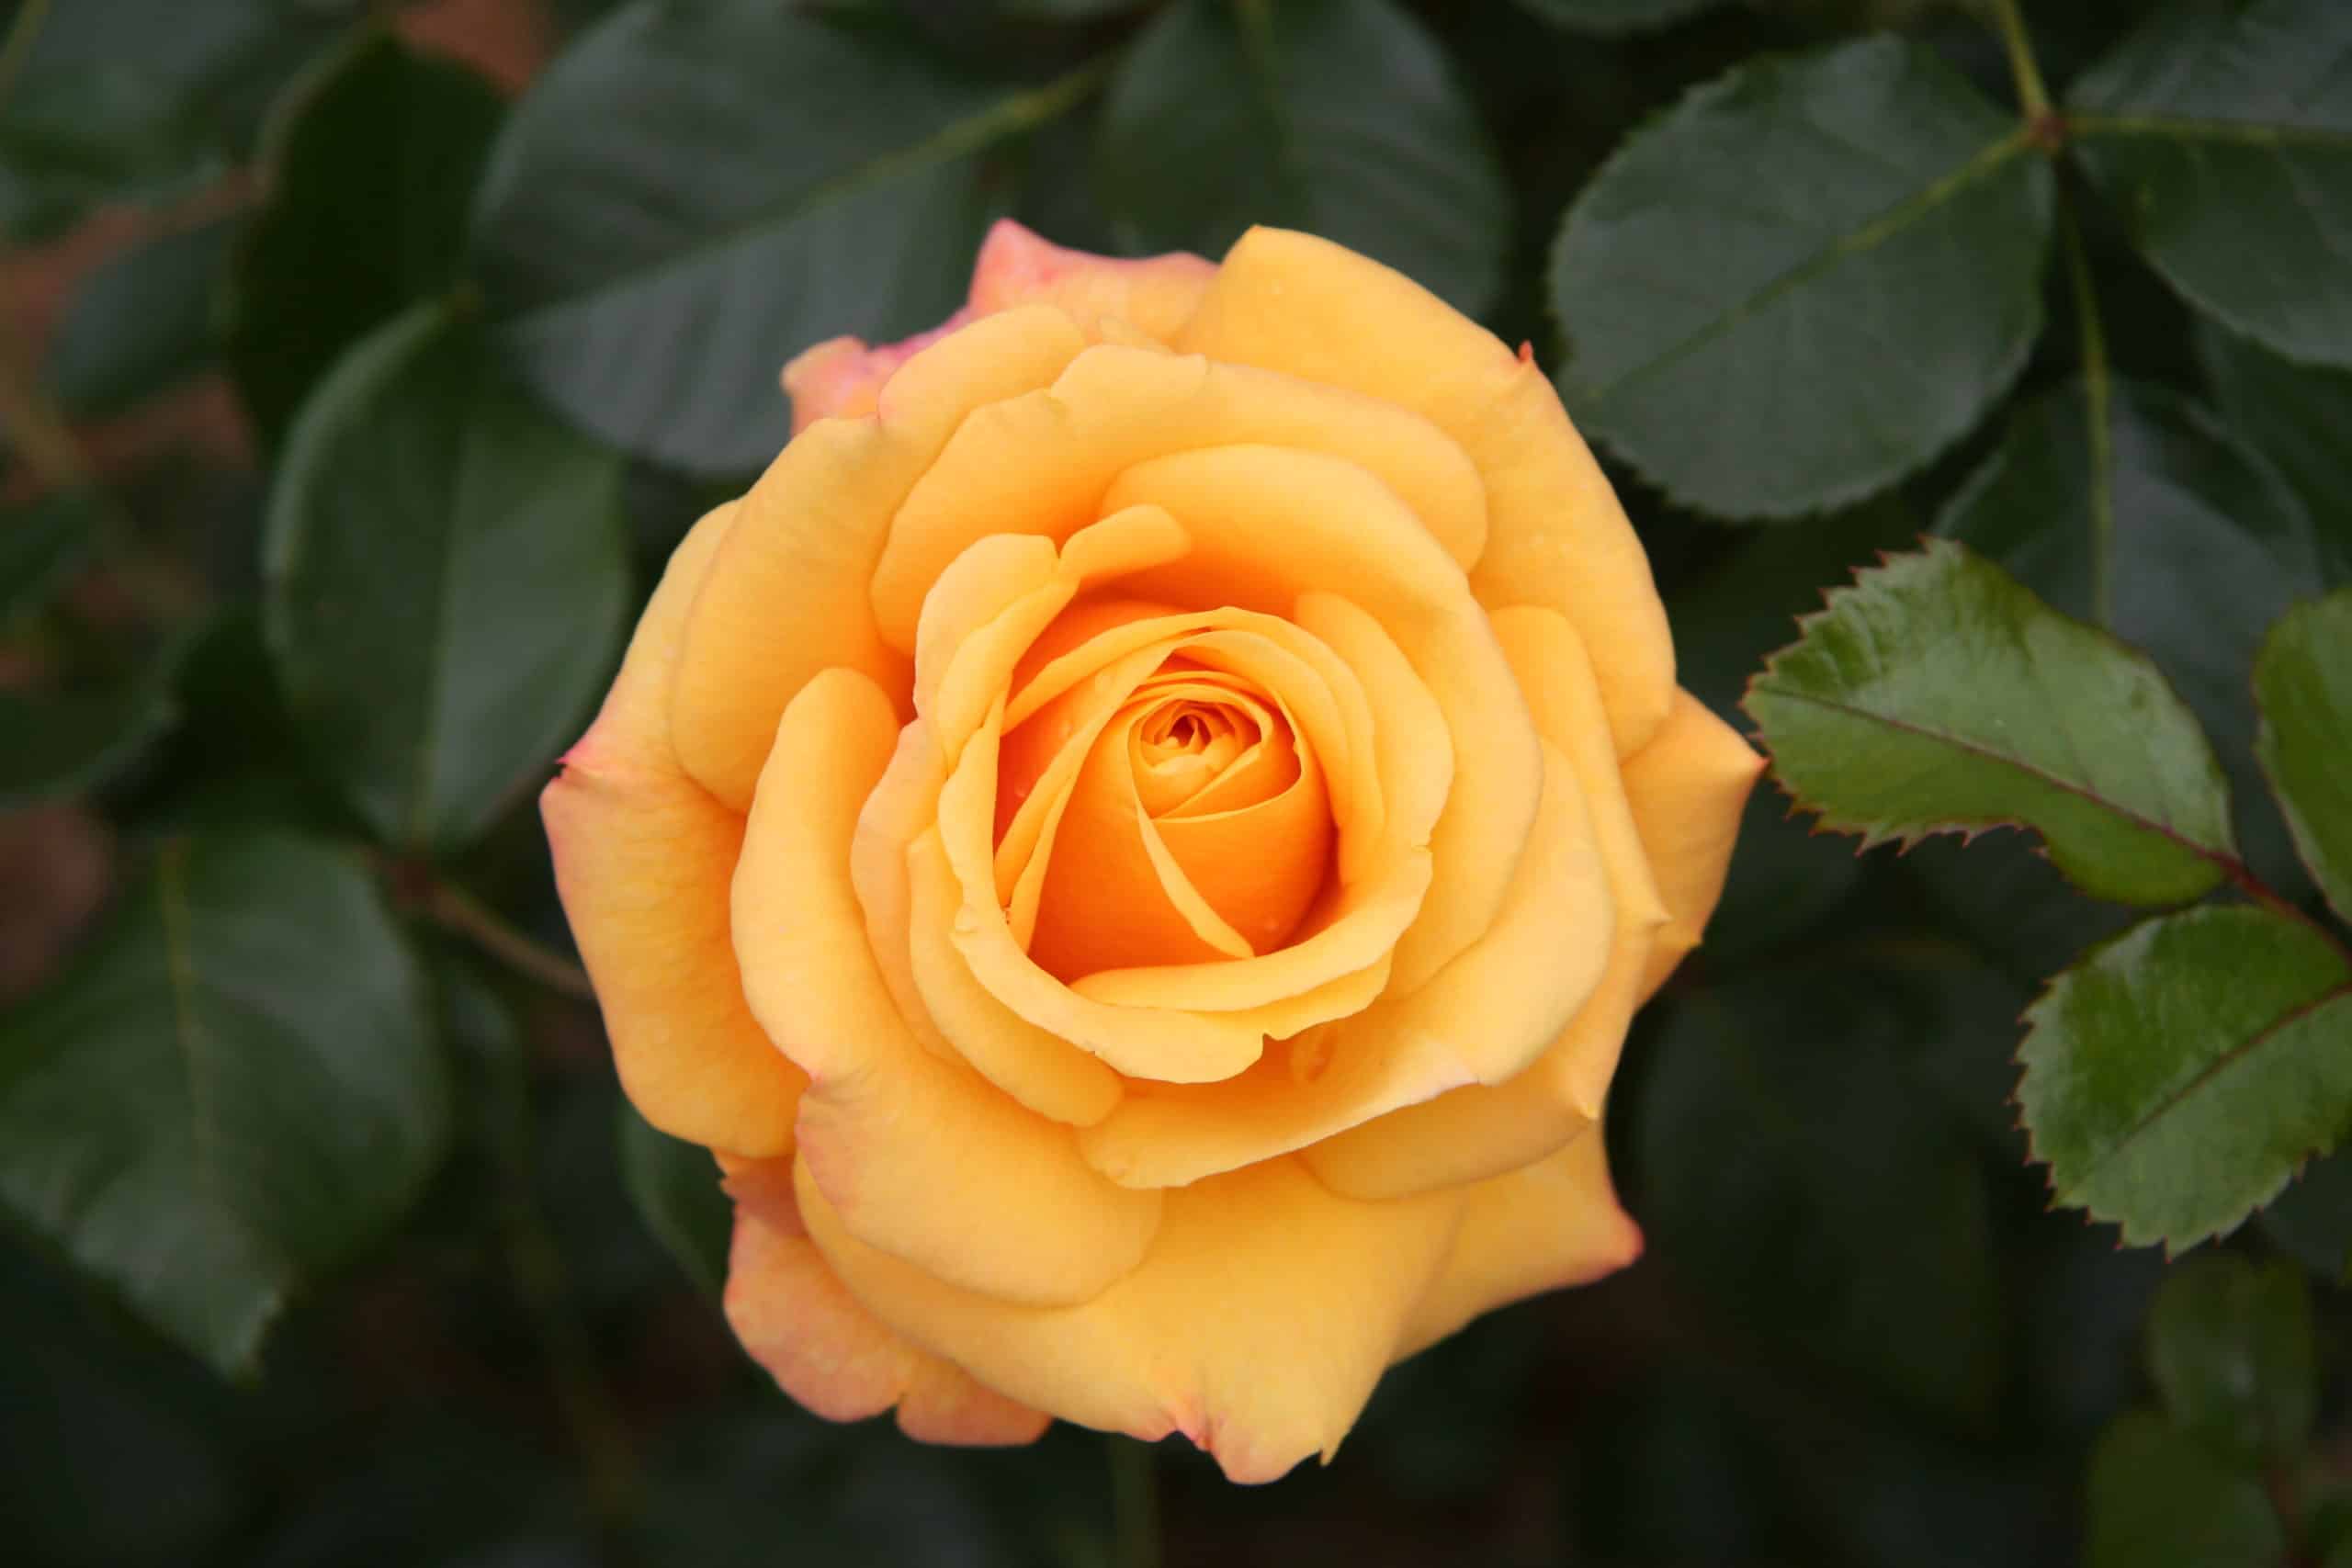 Rose. (Rosaceae Family).

